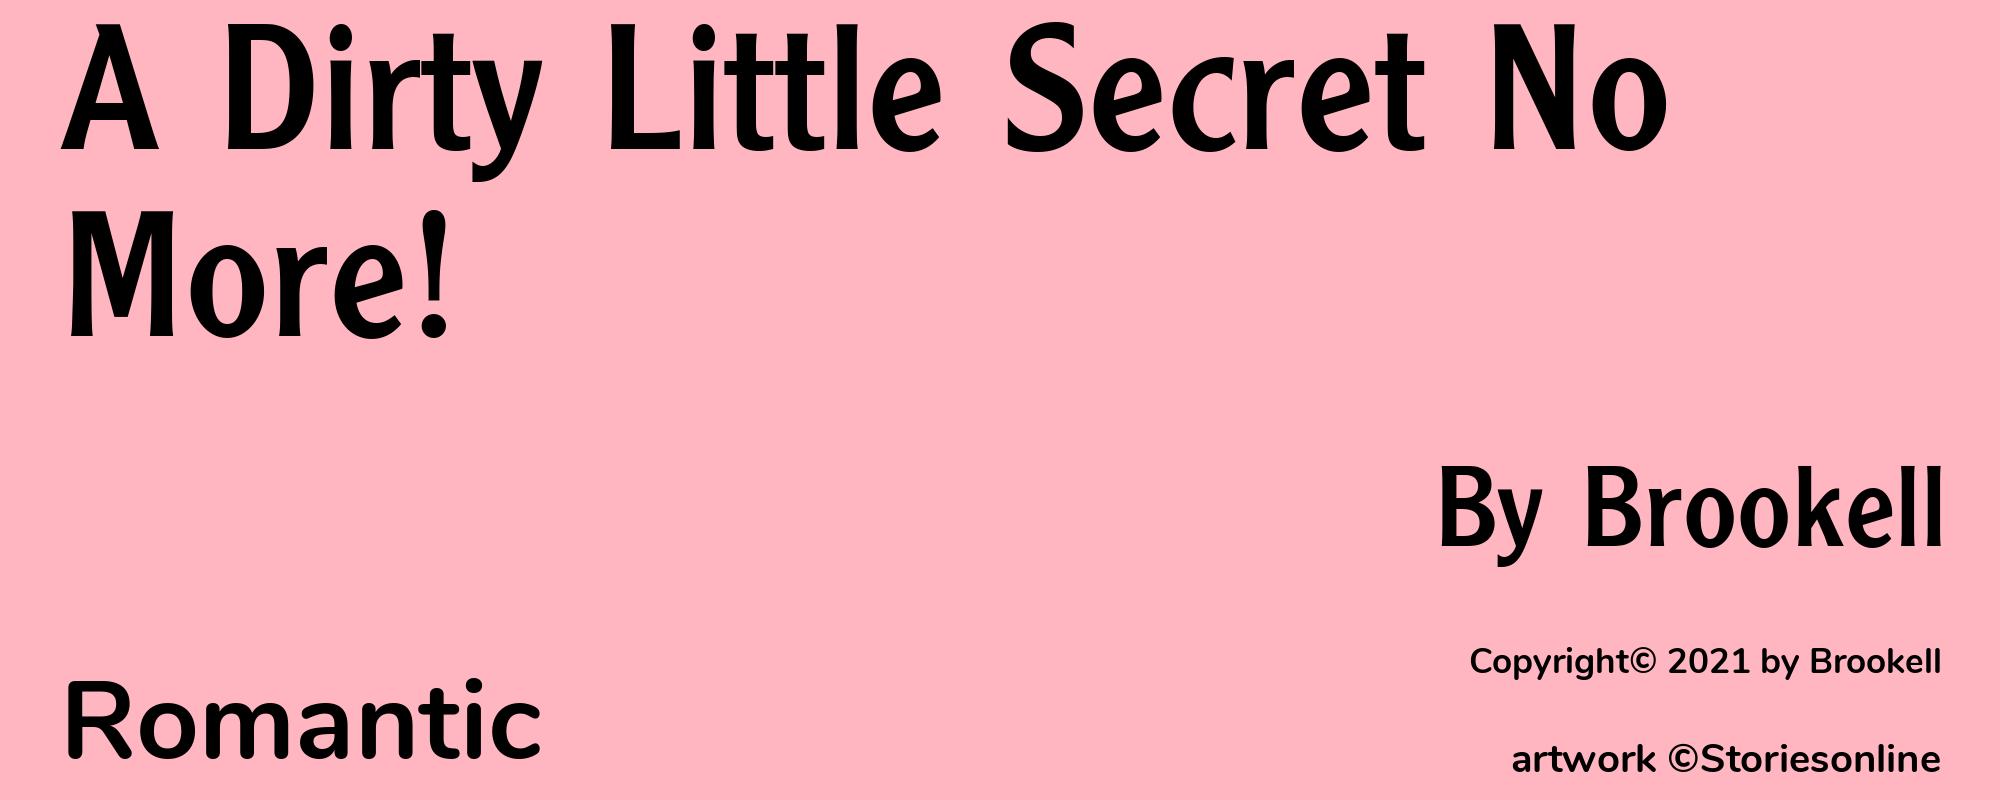 A Dirty Little Secret No More! - Cover